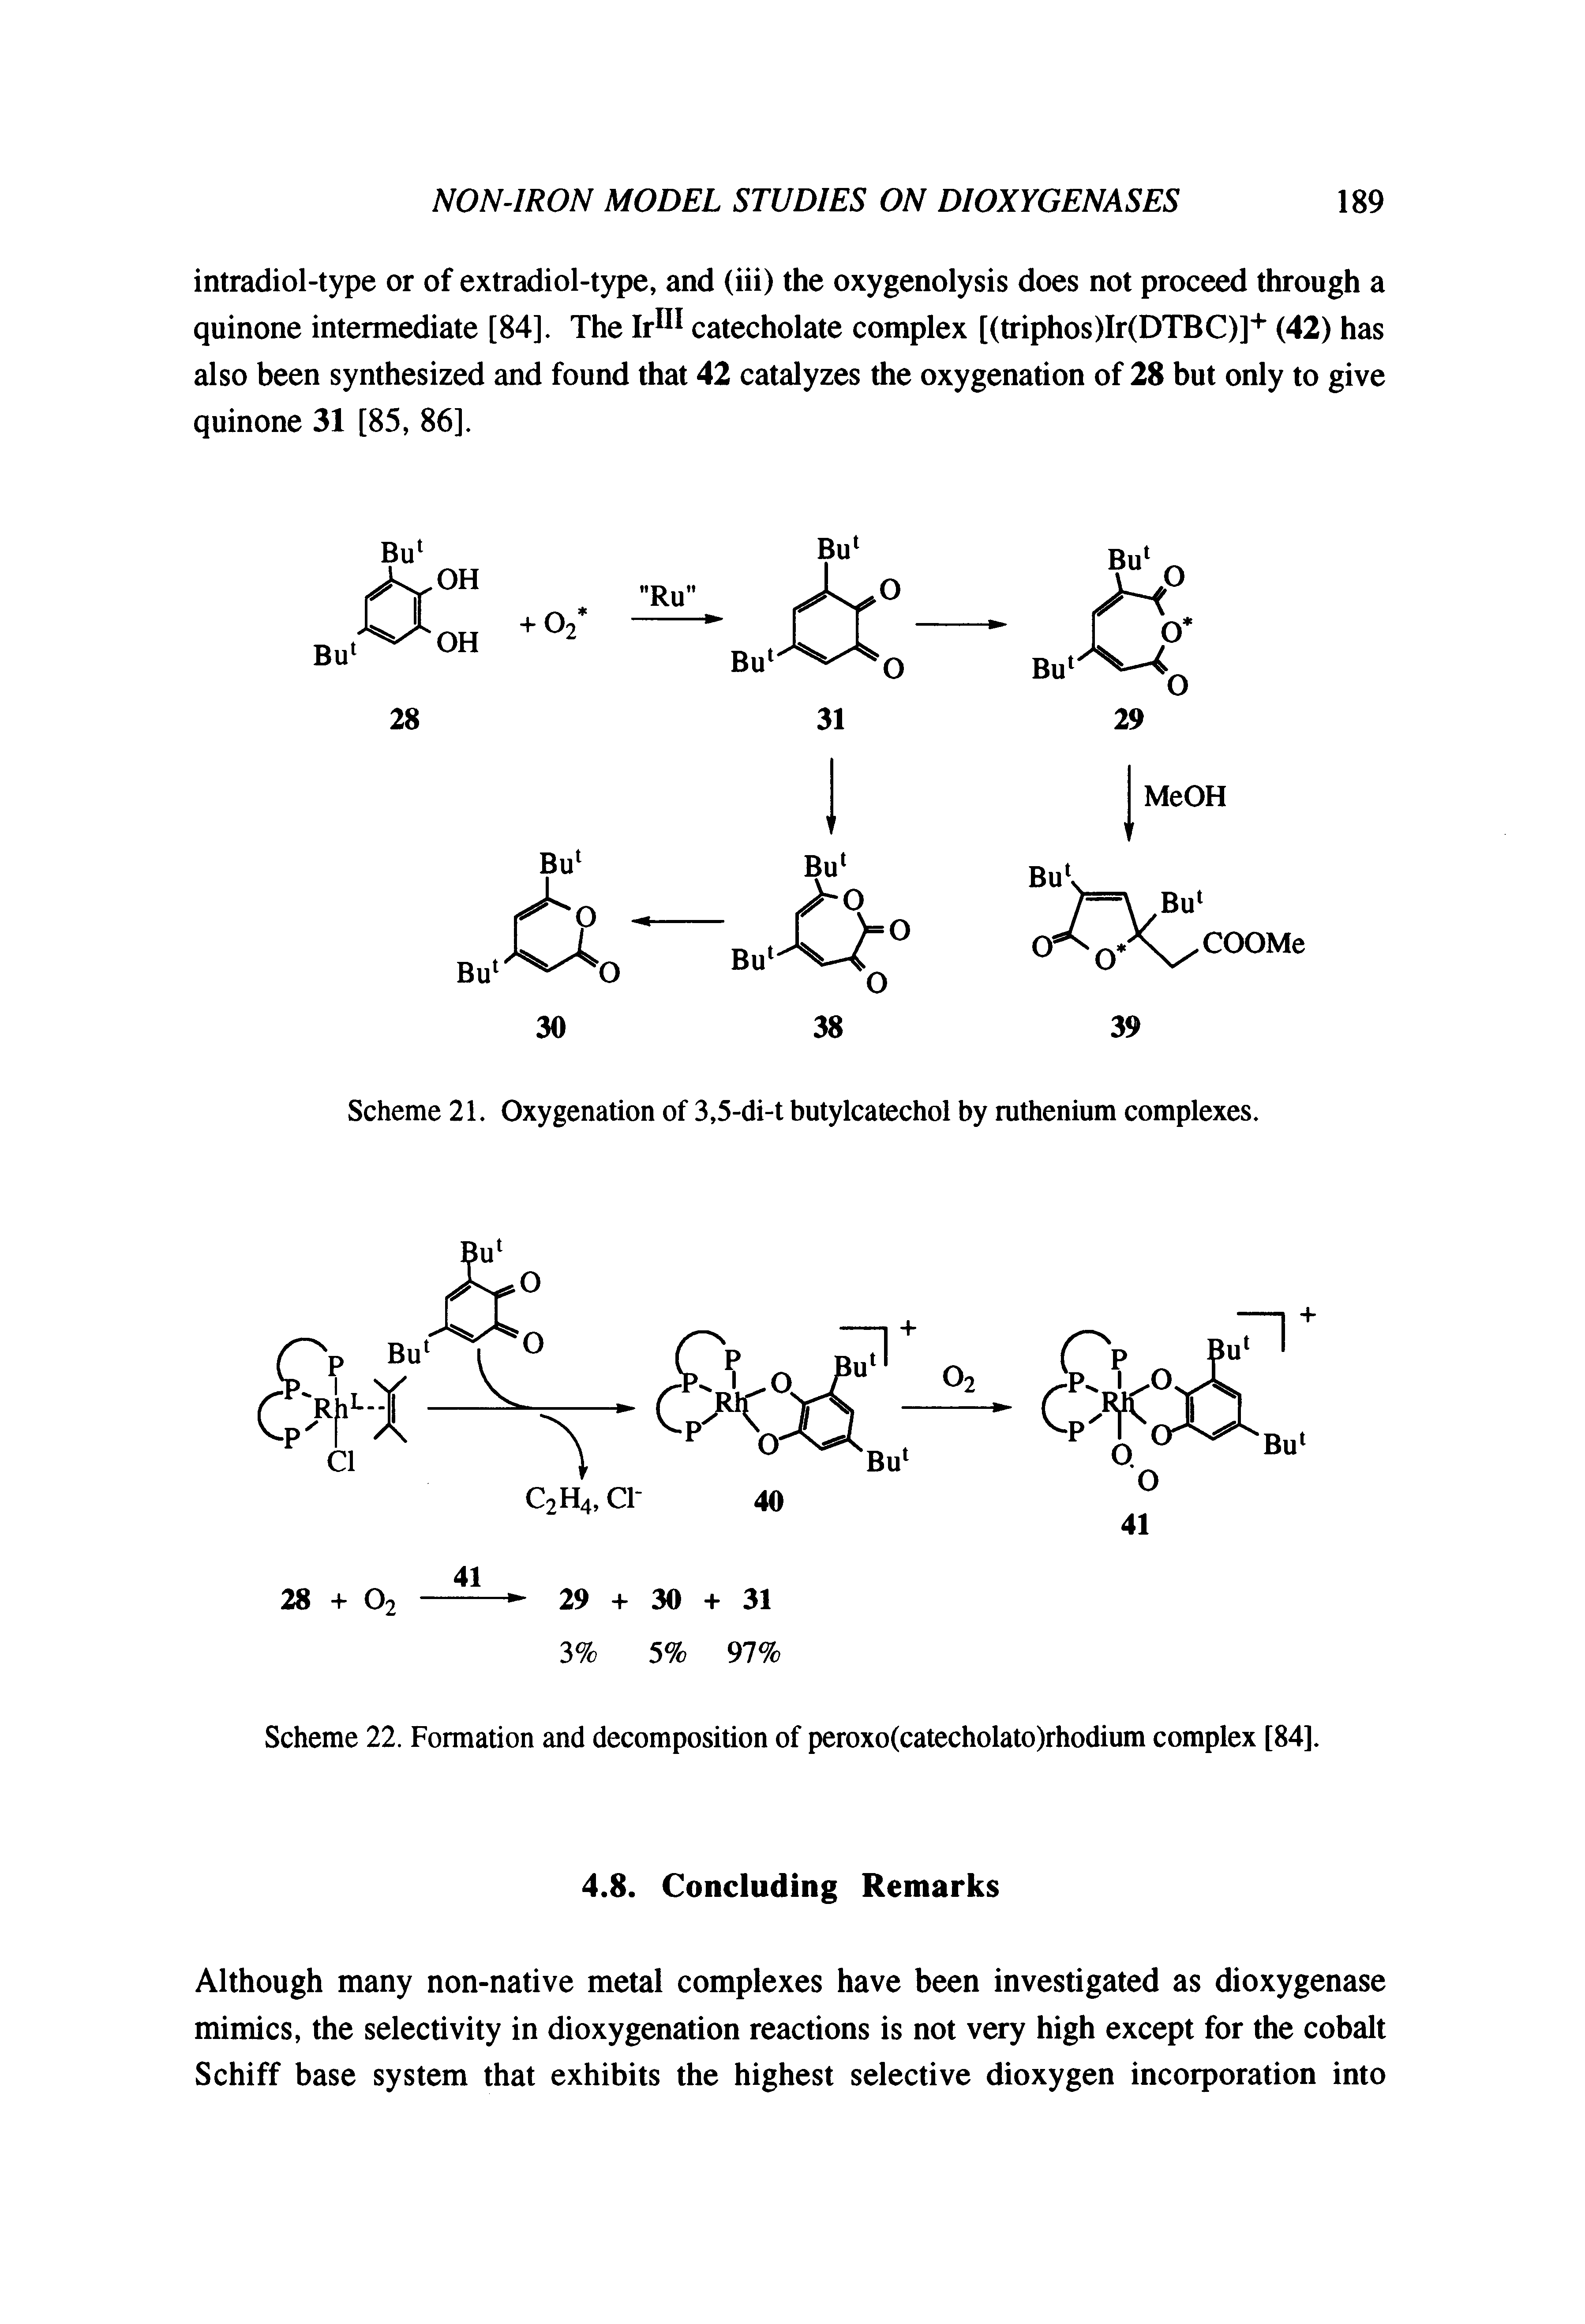 Scheme 22. Formation and decomposition of peroxo(catecholato)rhodium complex [84].